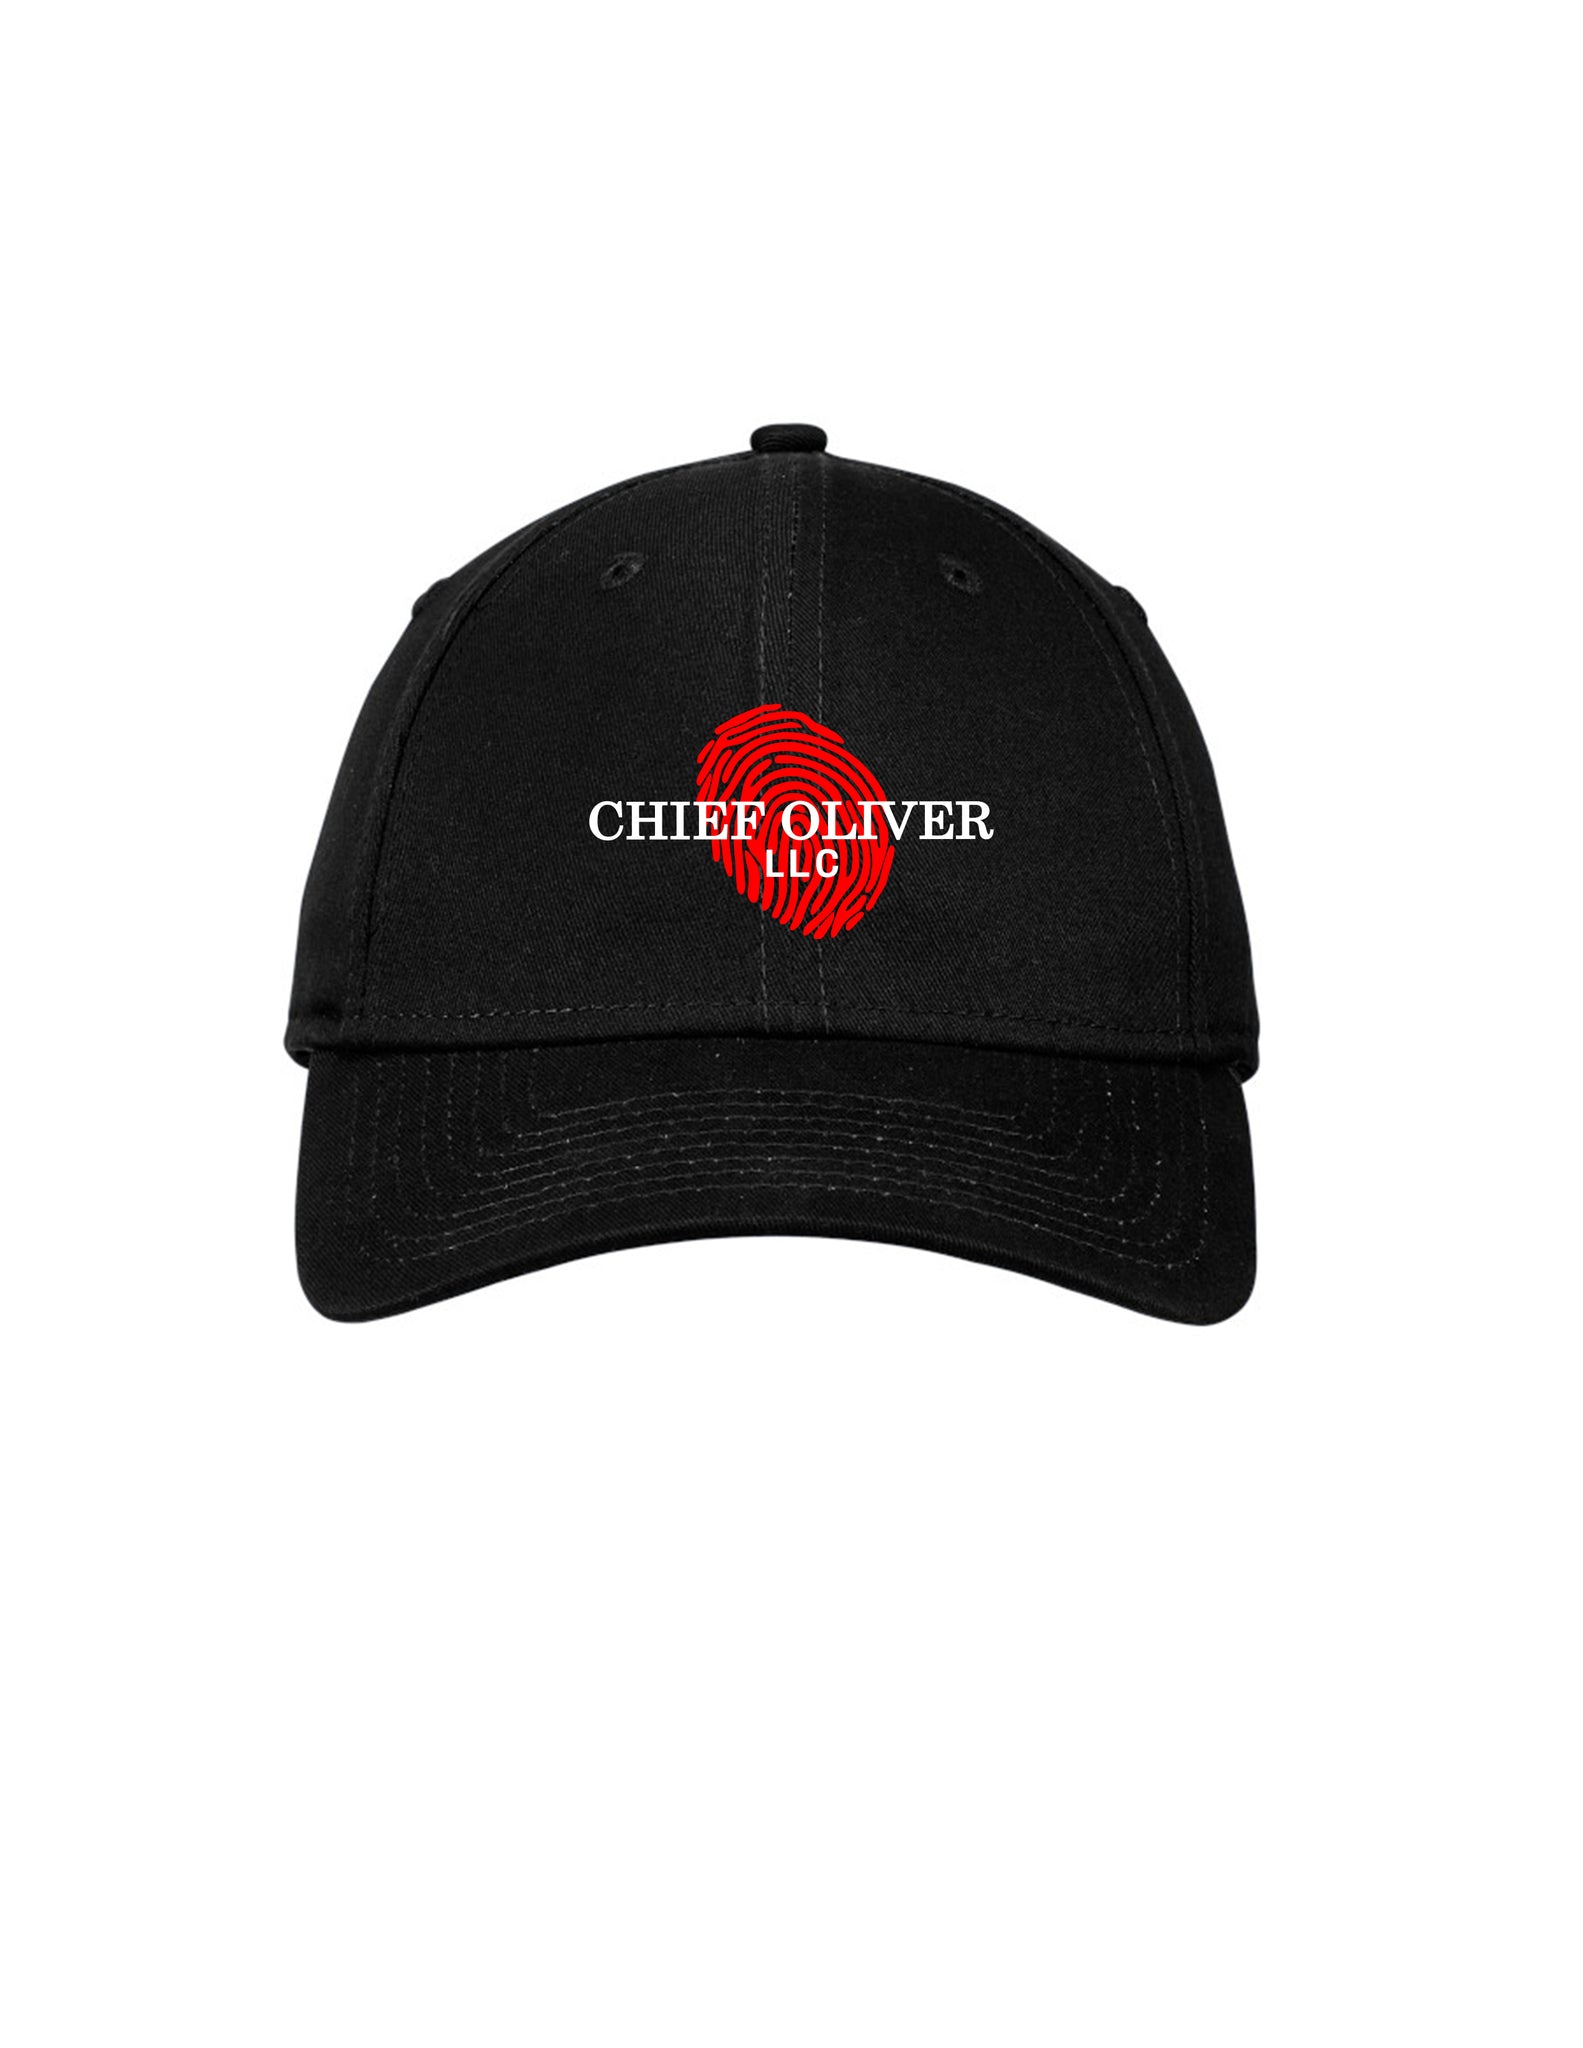 Chief Oliver New Era Adjustable Hat